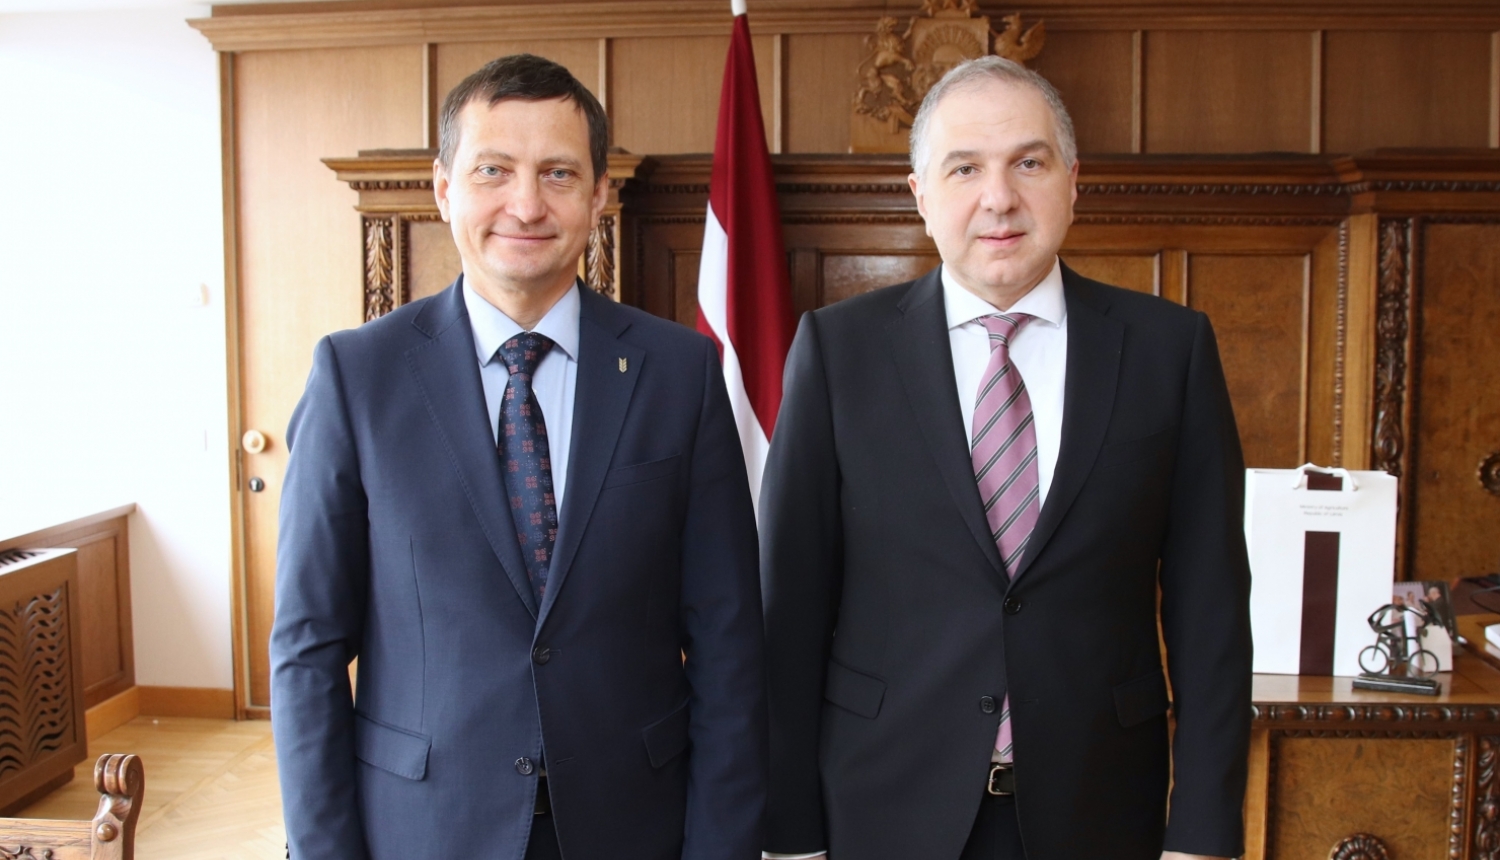 The Minister A. Krauze and the Ambassador of Georgia I. Kurashvili